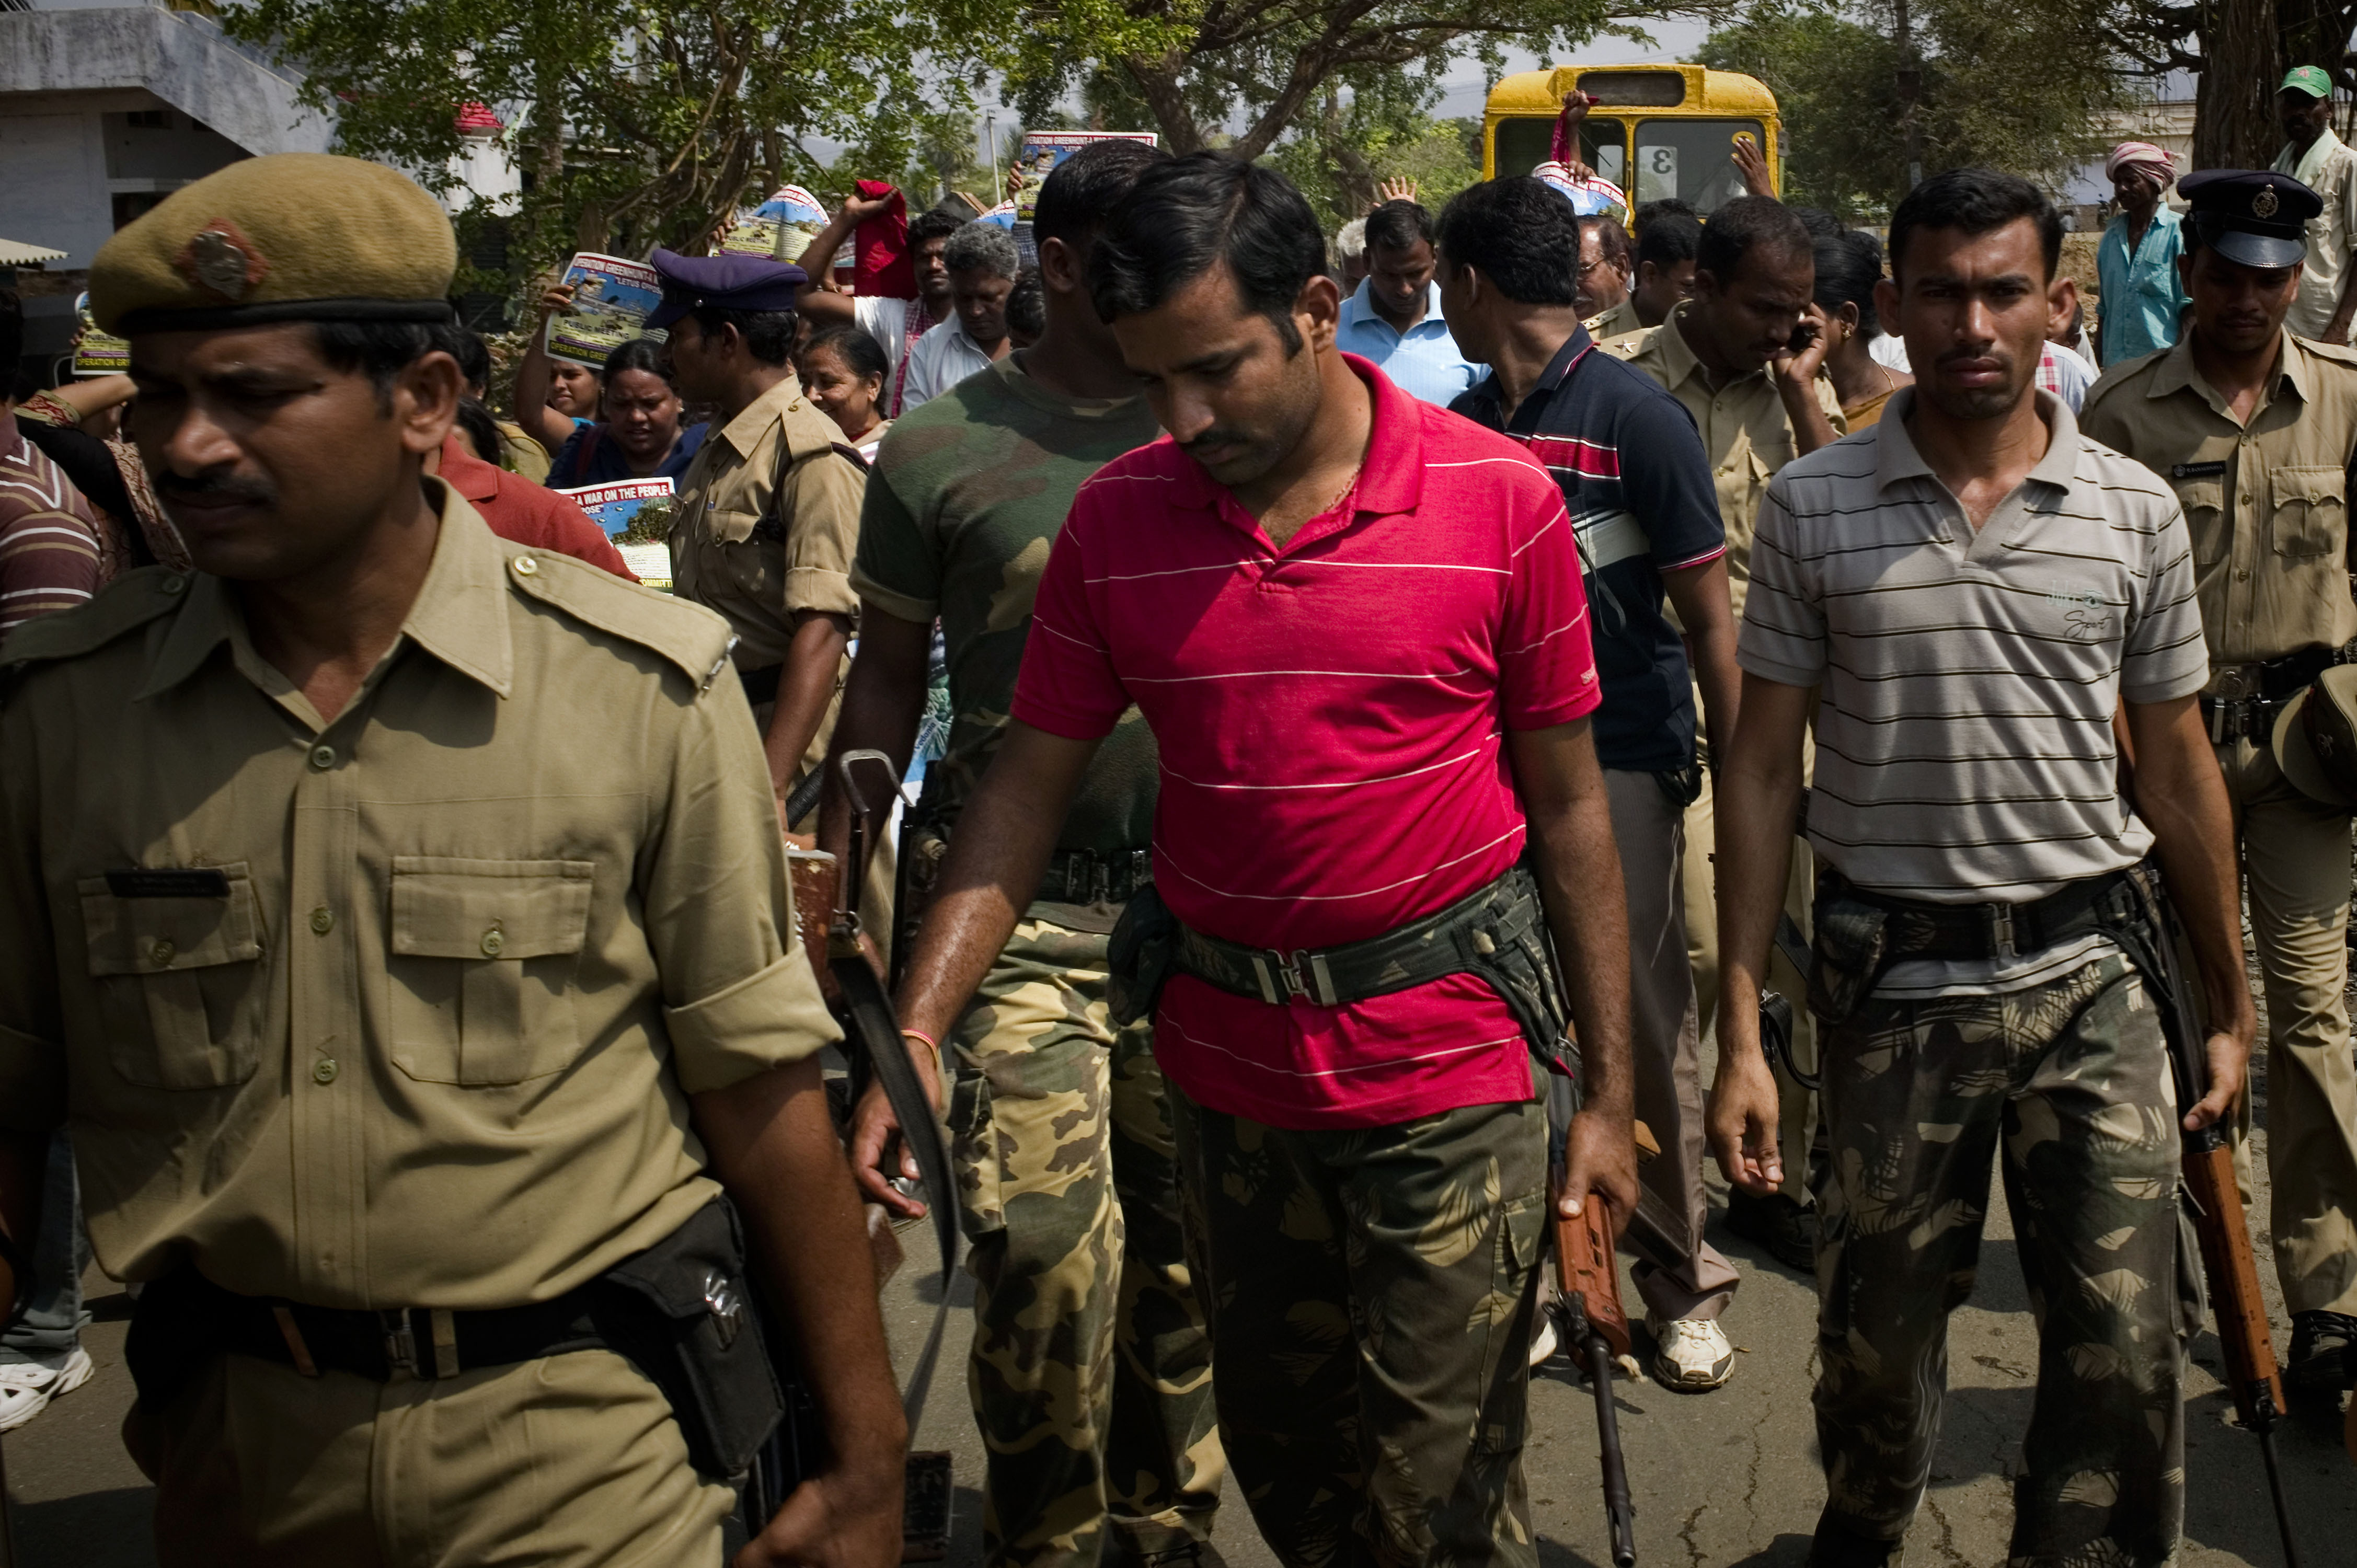 © Stanley Greene / NOOR Caption: India, Andhra Pradesh, 2012, Para military routing the Protest demonstration. IG : @stanleygreene Twitter : @noorimages